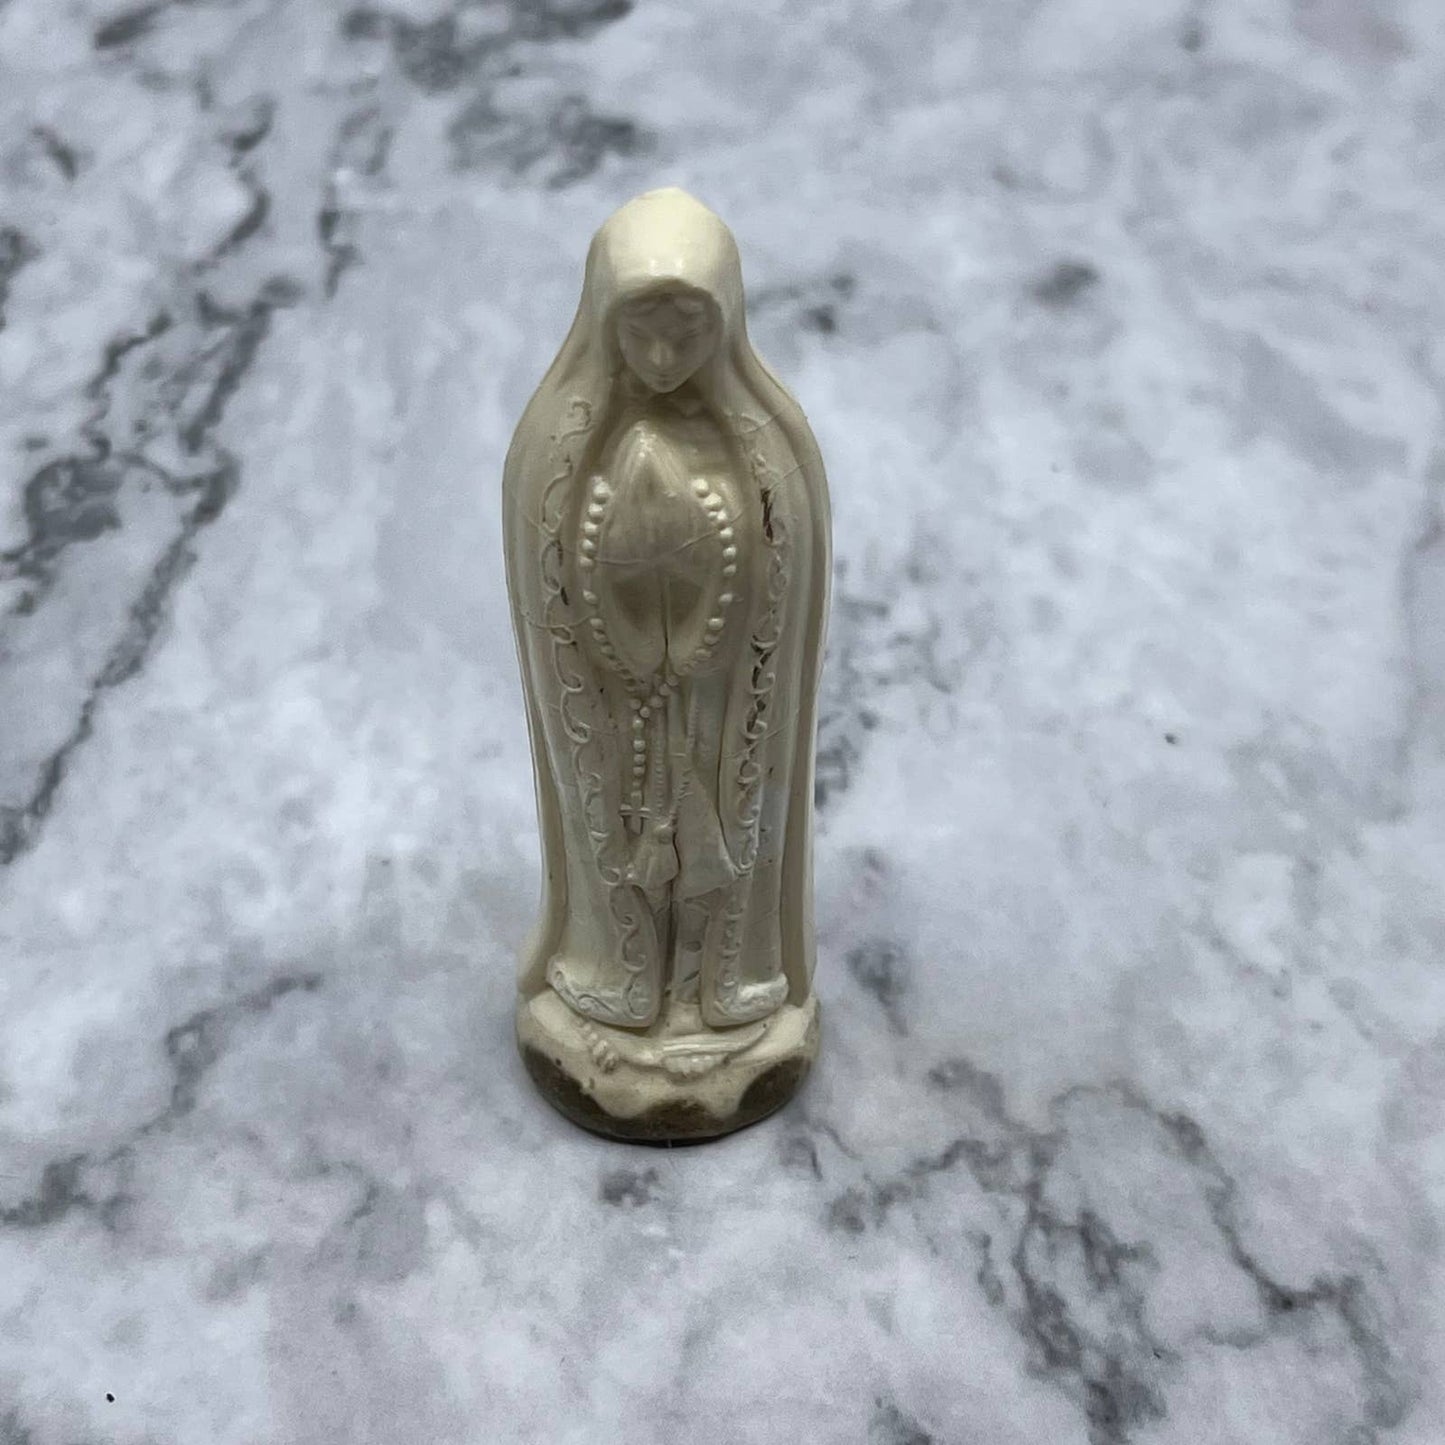 1960s Our Lady of Lourdes Virgin Mary Statue Catholic Figurine plastic 2.75” SE9